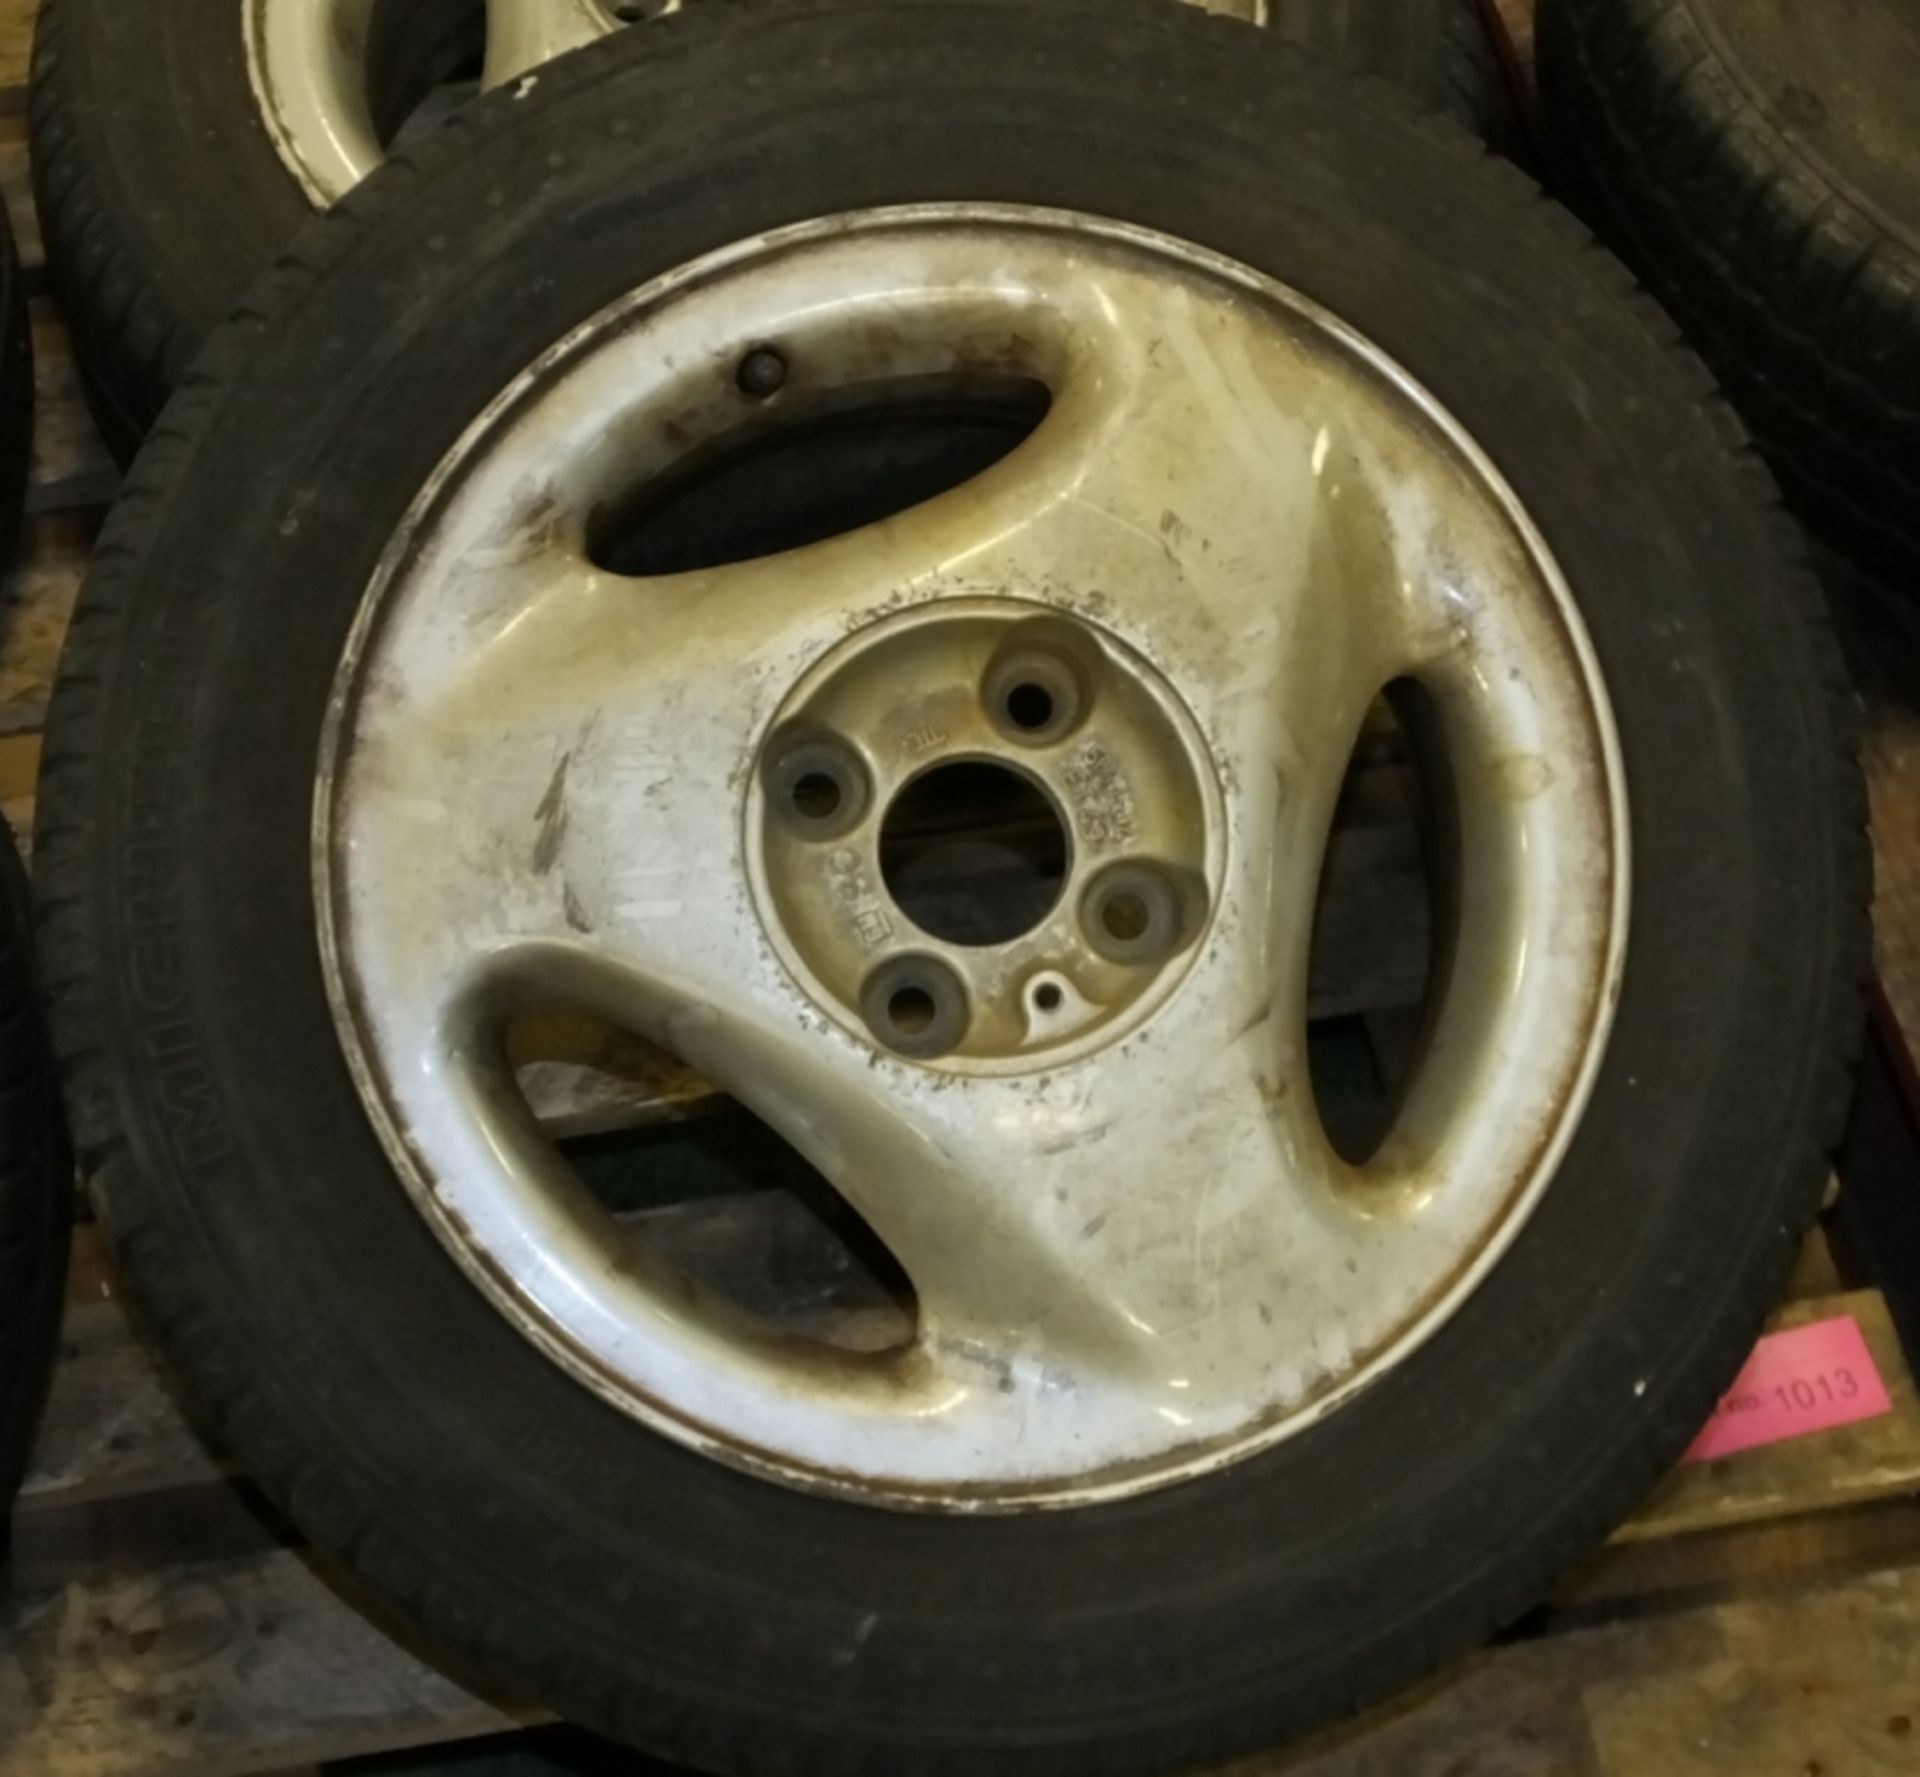 4x Corsa Alloy Wheels & Tires - Image 2 of 2